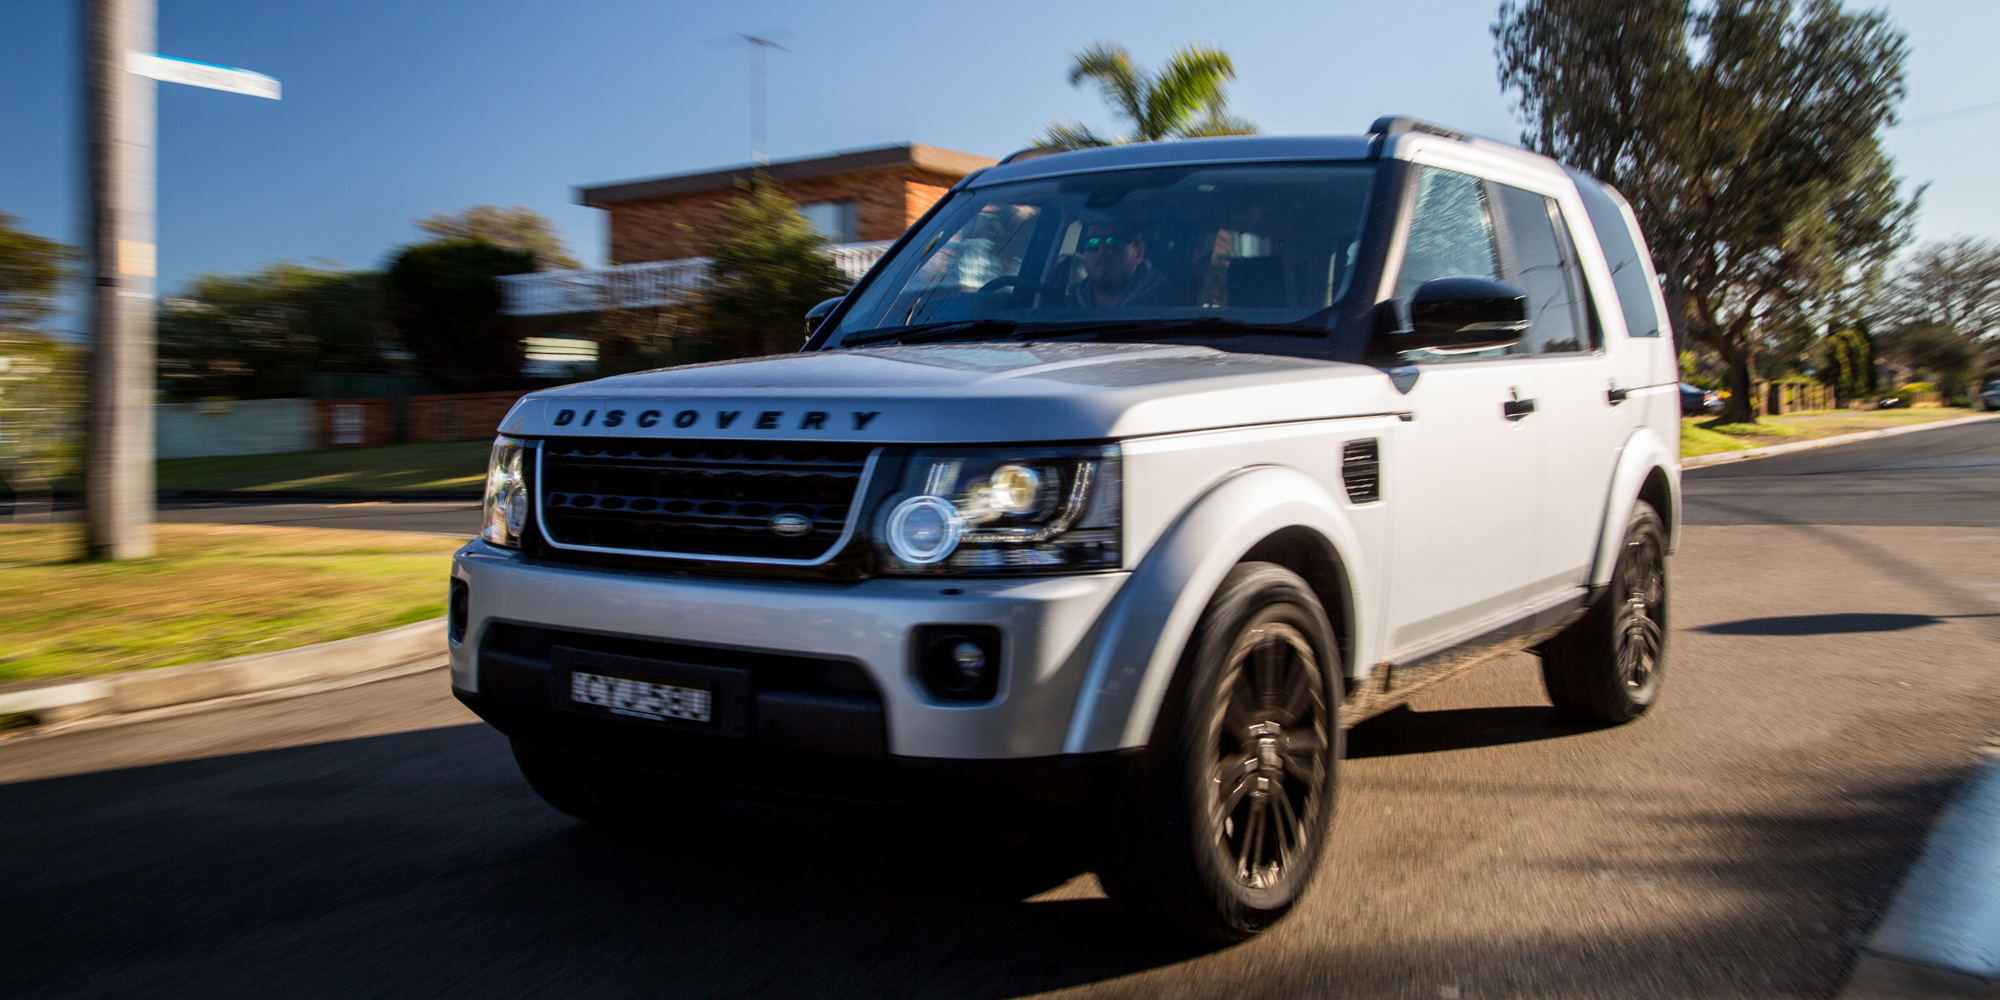 2015 Land Rover Discovery Review photos CarAdvice